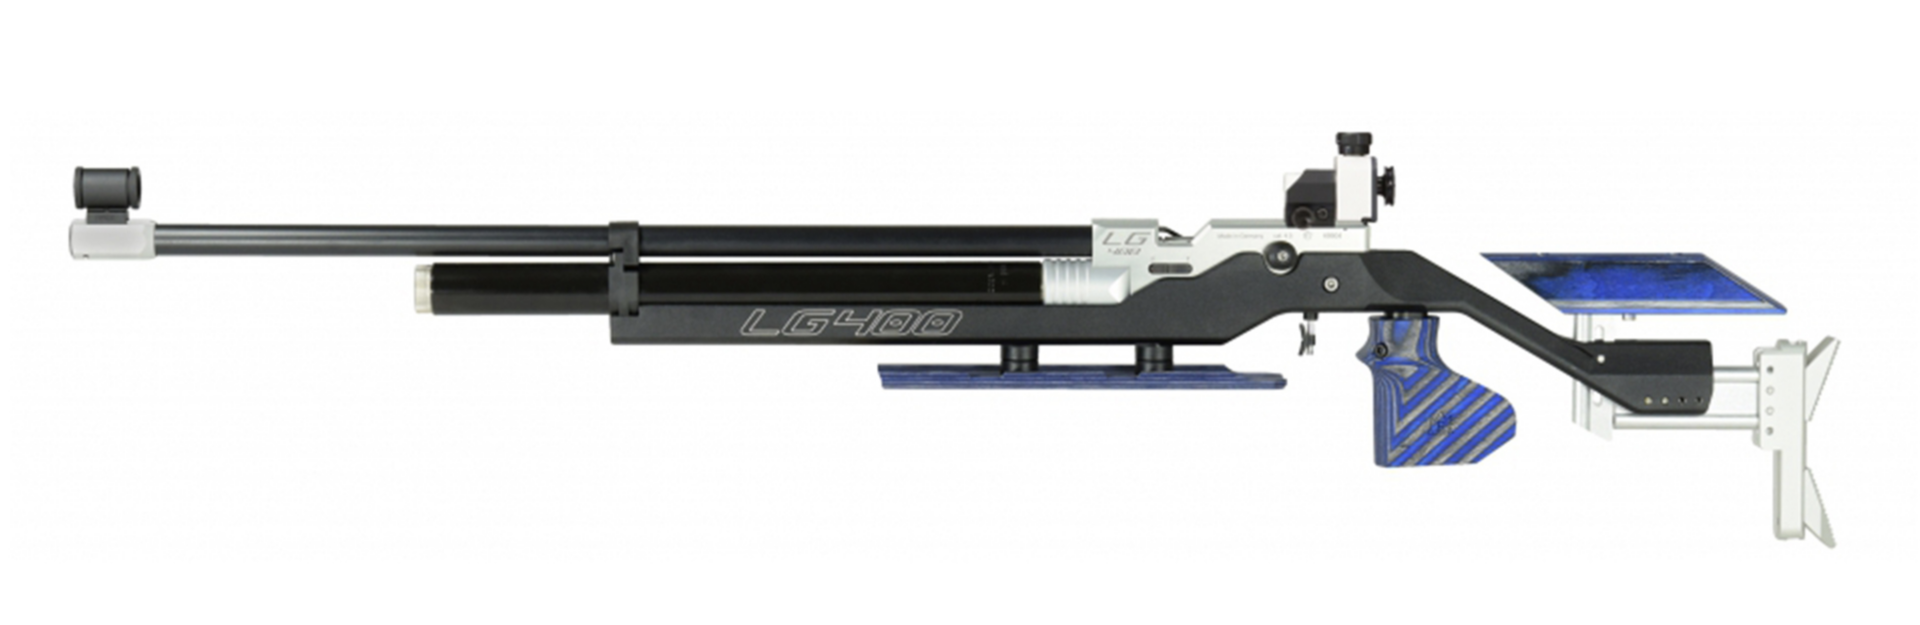 LG400 BLACKTEC PLUS mit Sport-Diopter LG400 Blacktec